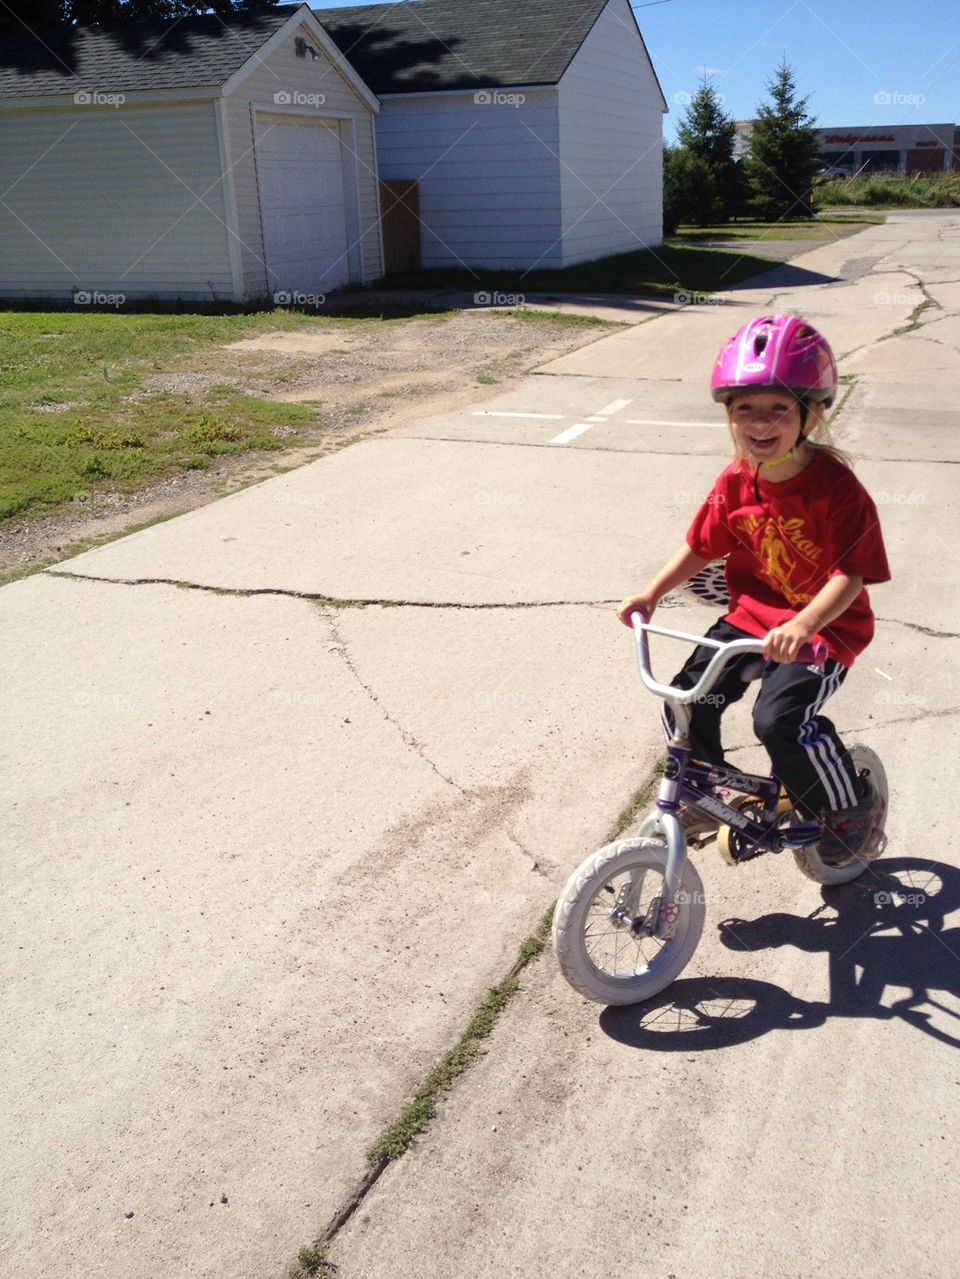 Hailey on the bike